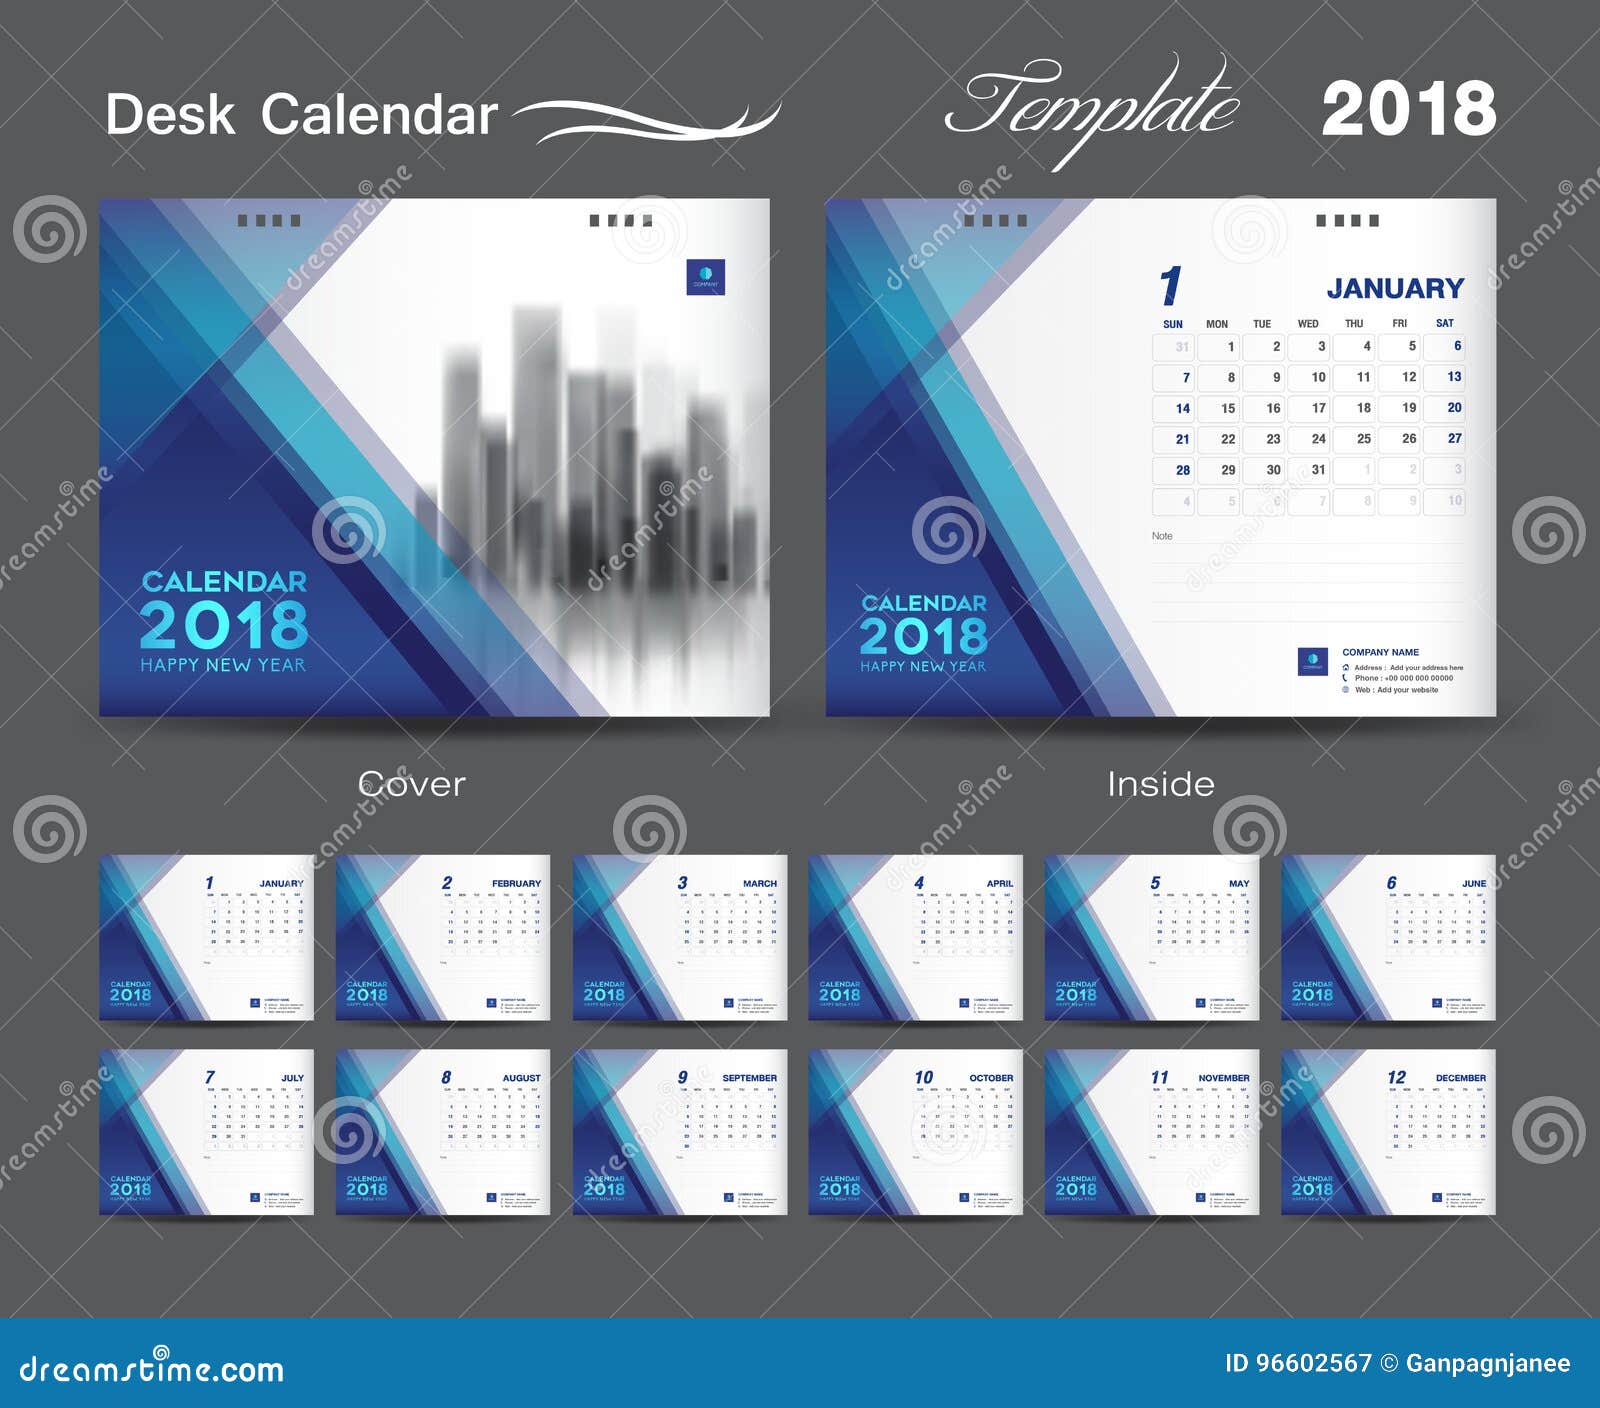 Desk Calendar 2018 Template Layout Design, Blue Cover